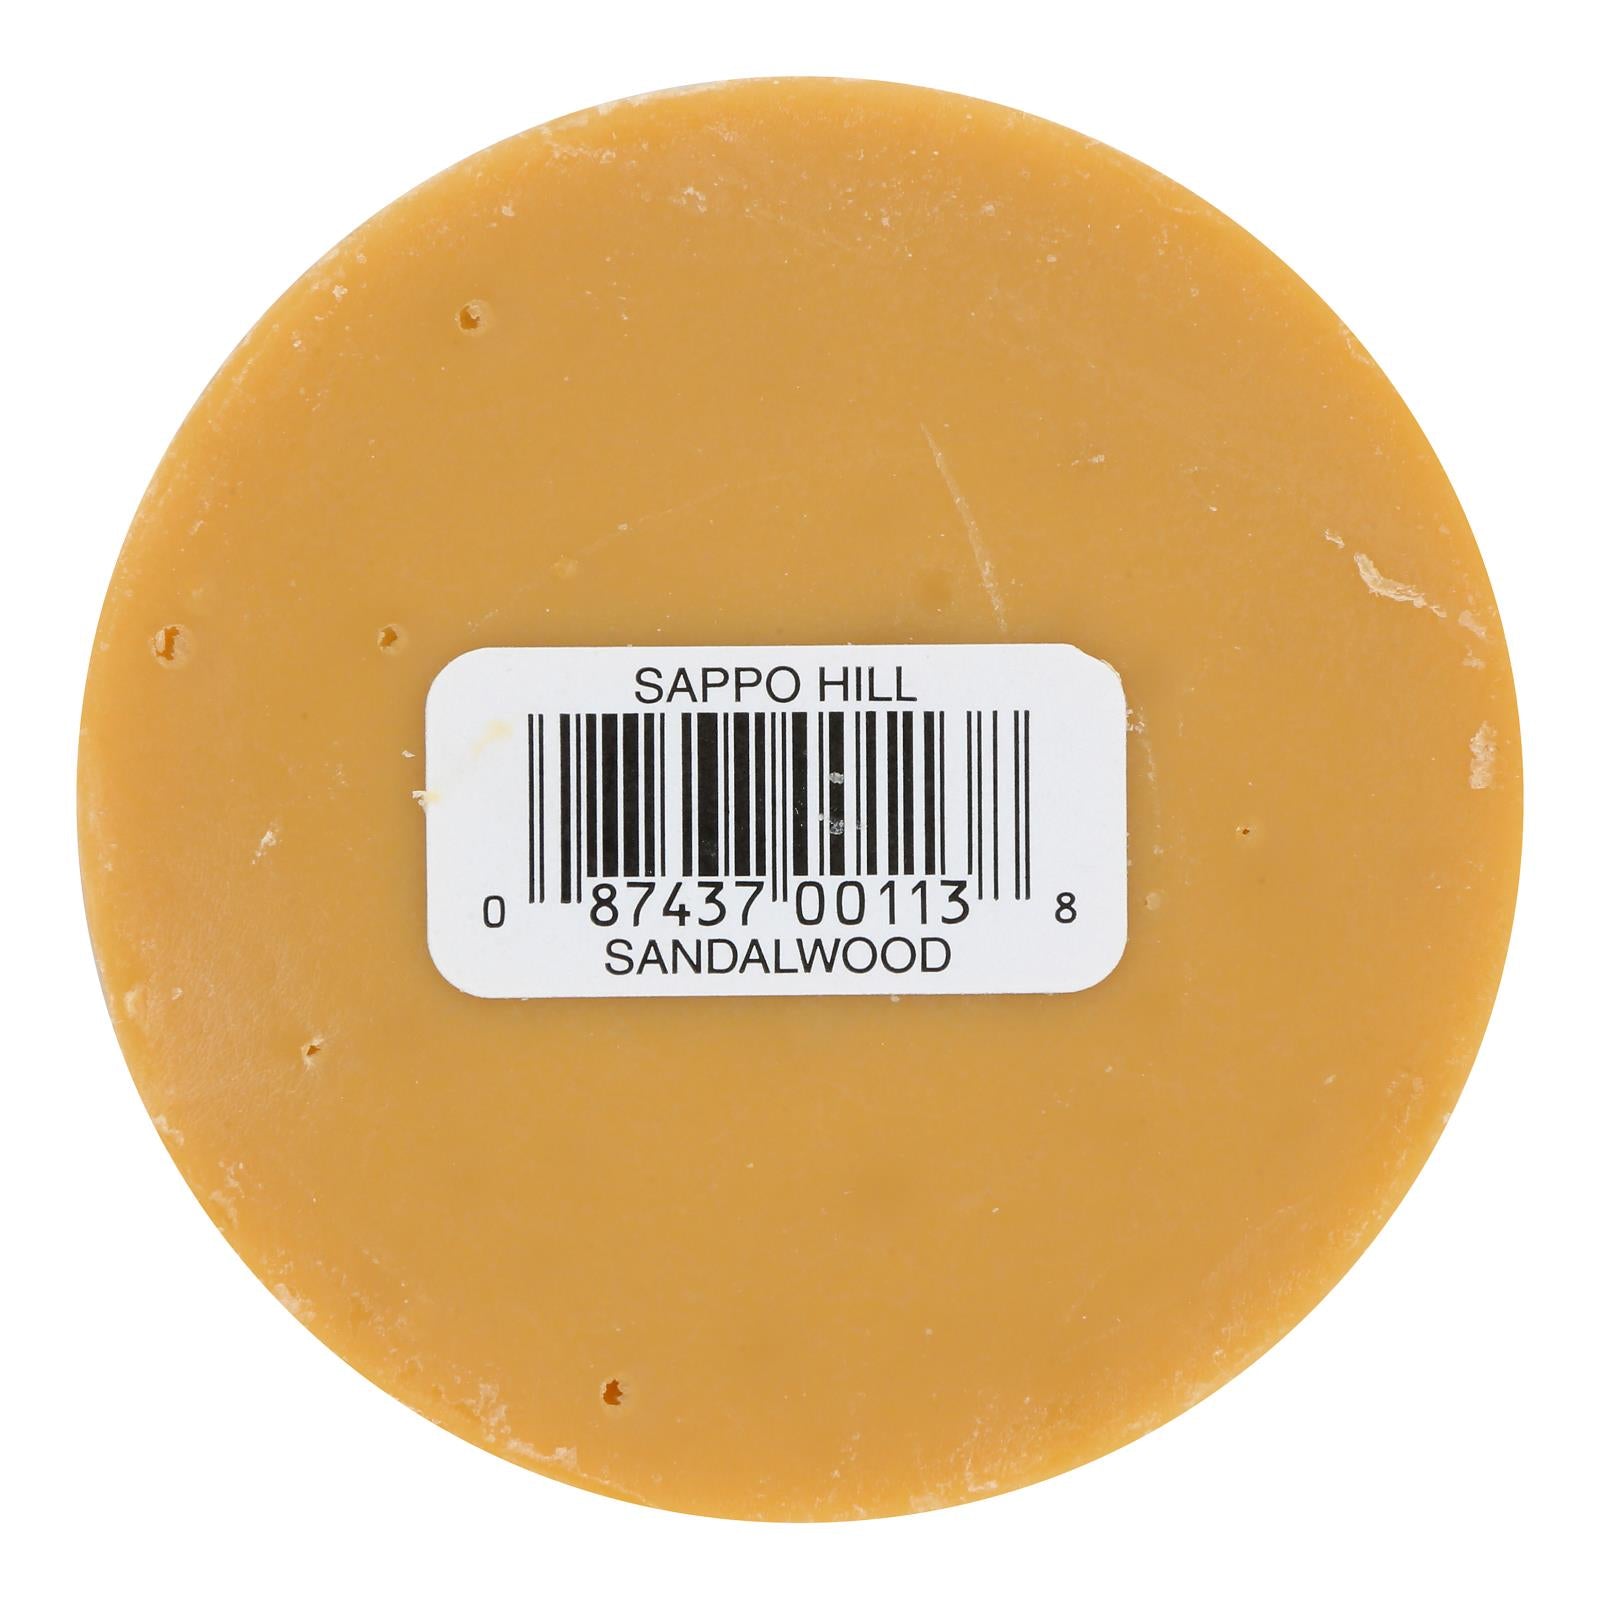 Sappo Hill Sandalwood Glycerine Soap - 3.5 Oz - Case Of 12